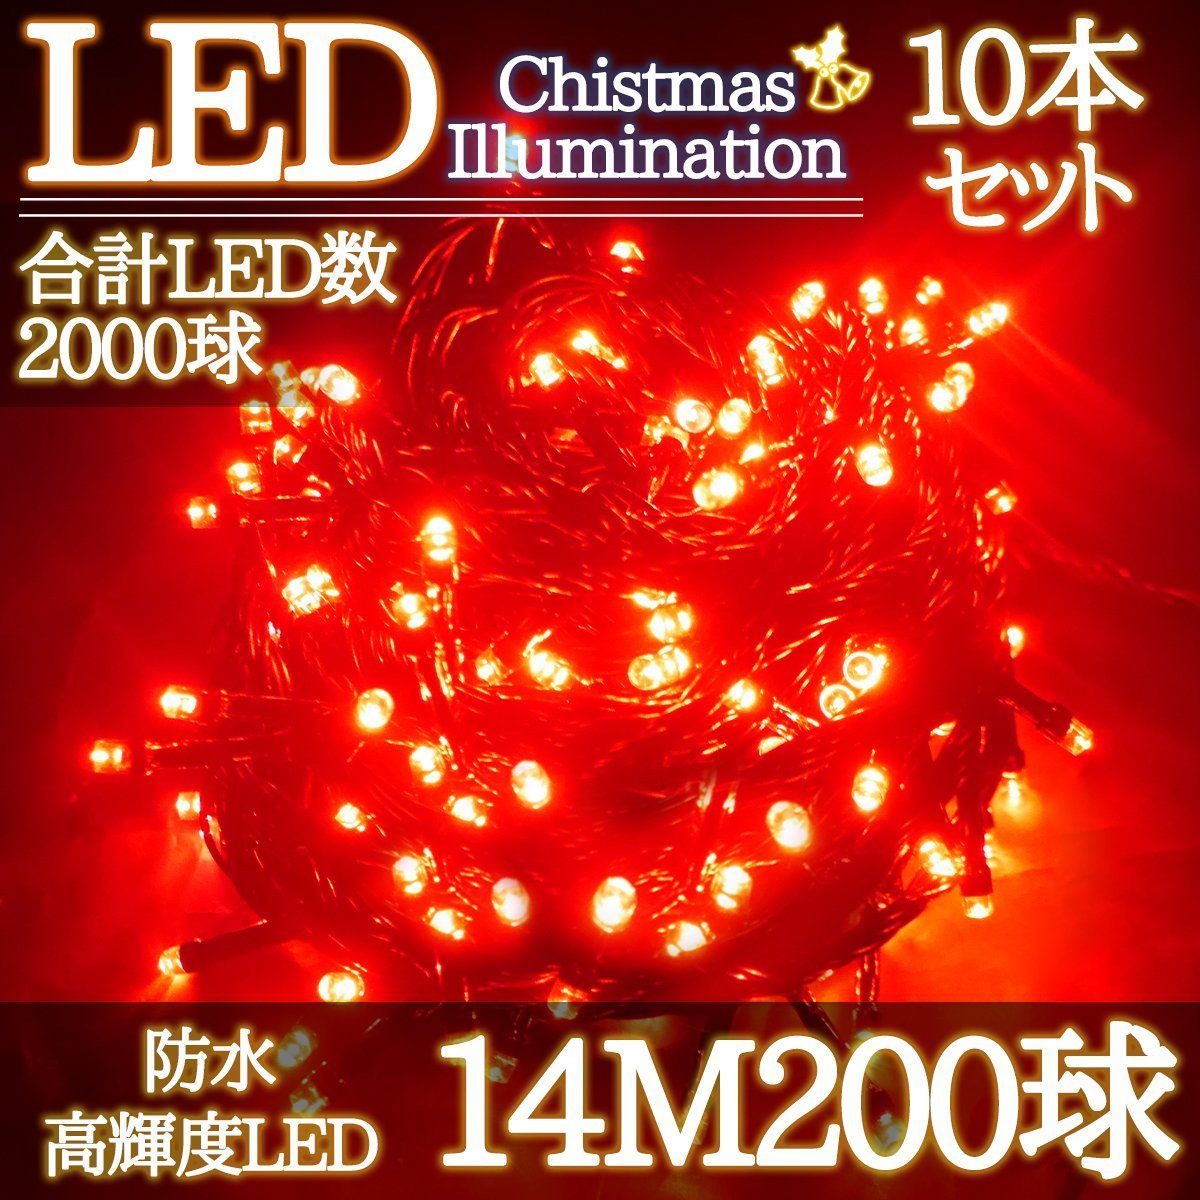 LEDイルミネーション 14M LED200灯 クリスマス つらら ブラックコード 電飾 屋外 ガーデン 庭 防水 連結可能 レッド 10箱同梱 KR-95